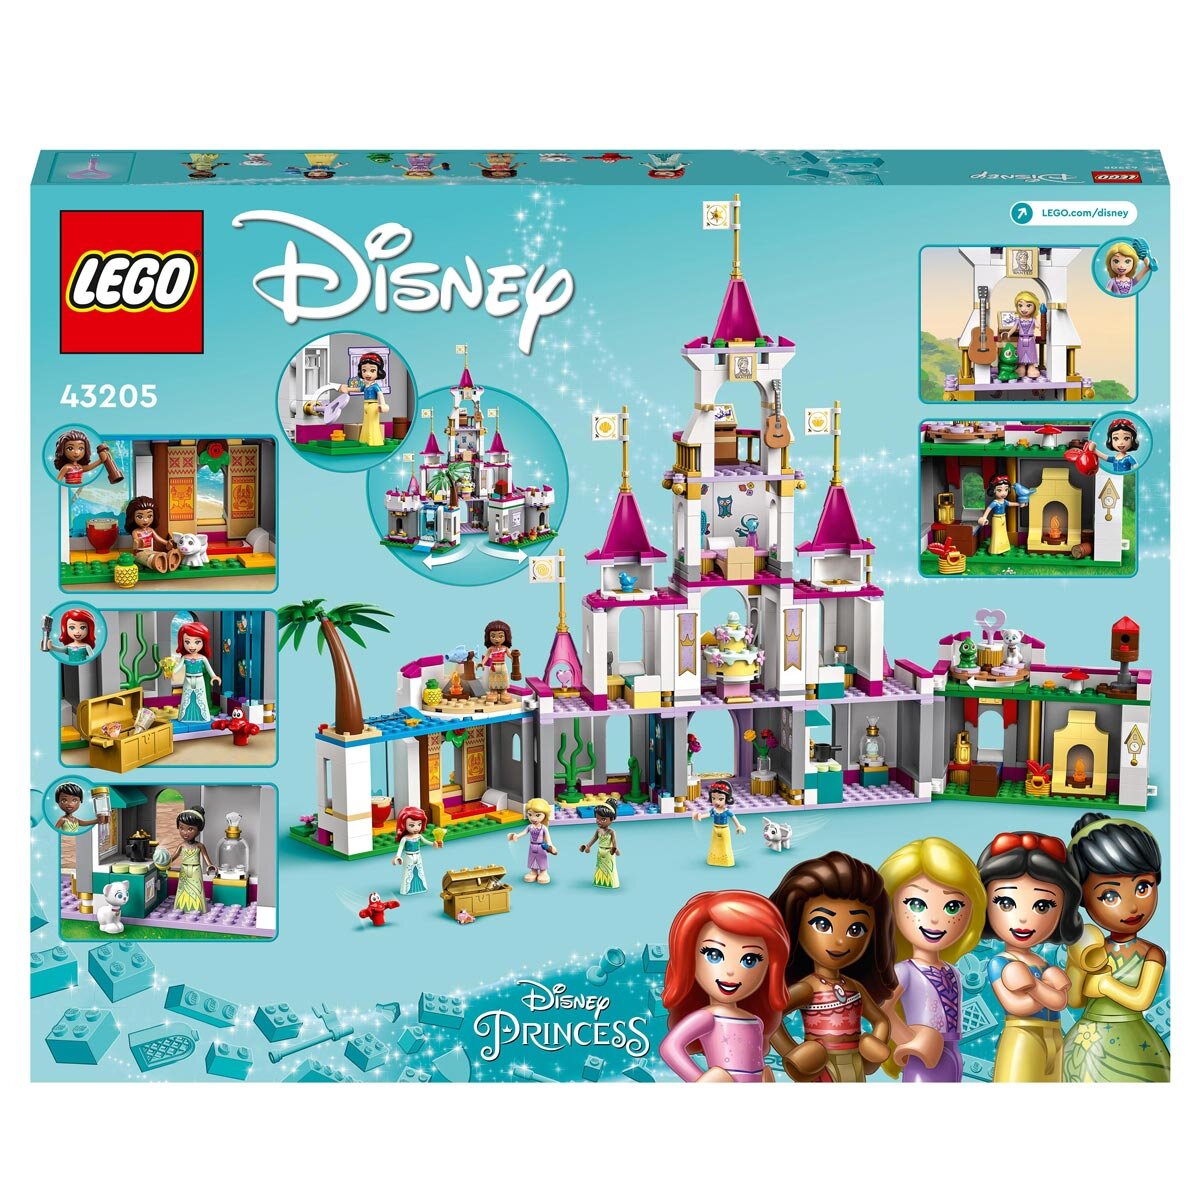 Buy LEGO Disney Princess Ultimate Adventure Castle Back of Box Image at Costco.co.uk